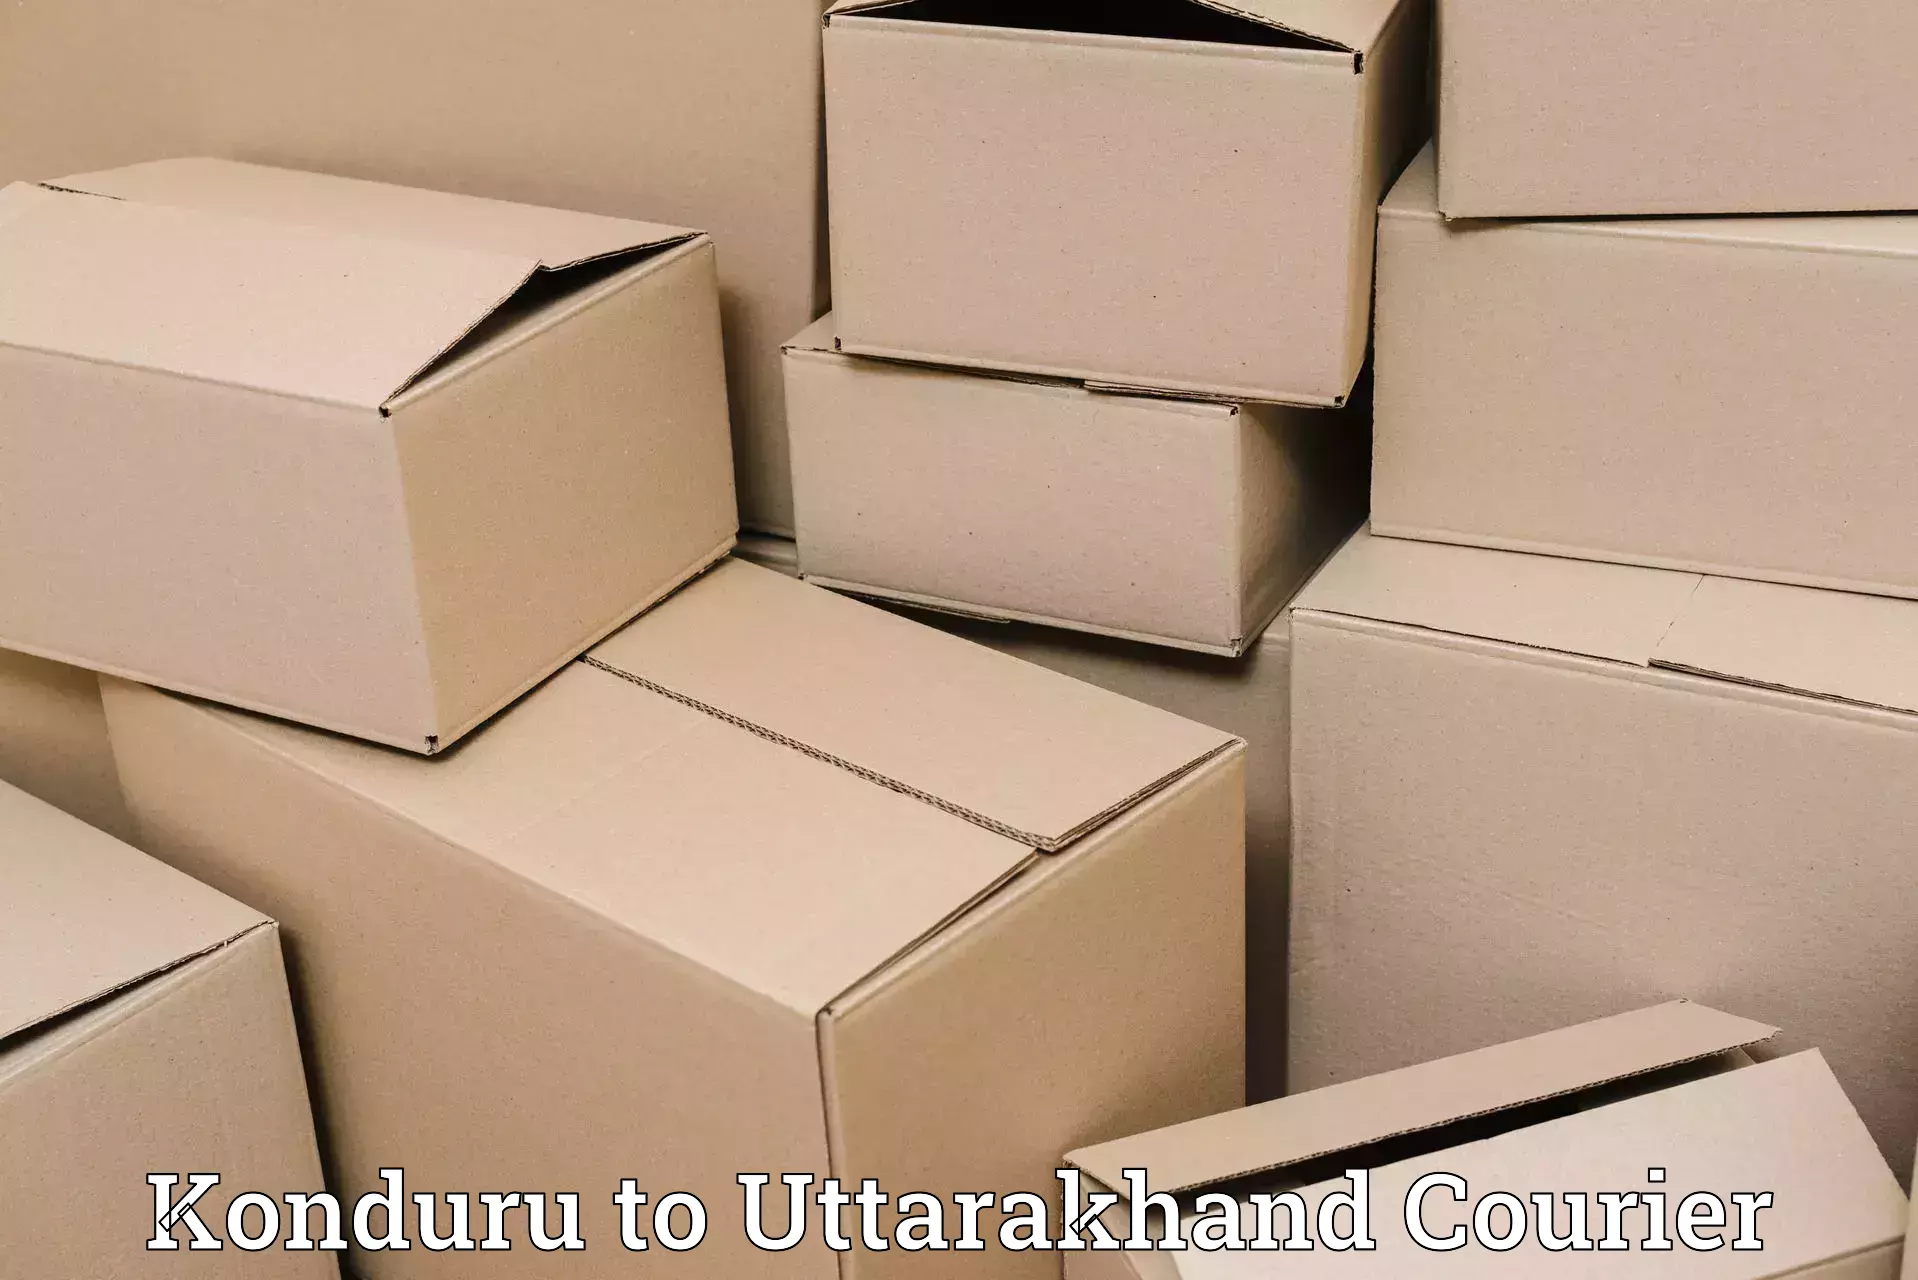 Express delivery capabilities Konduru to Uttarakhand